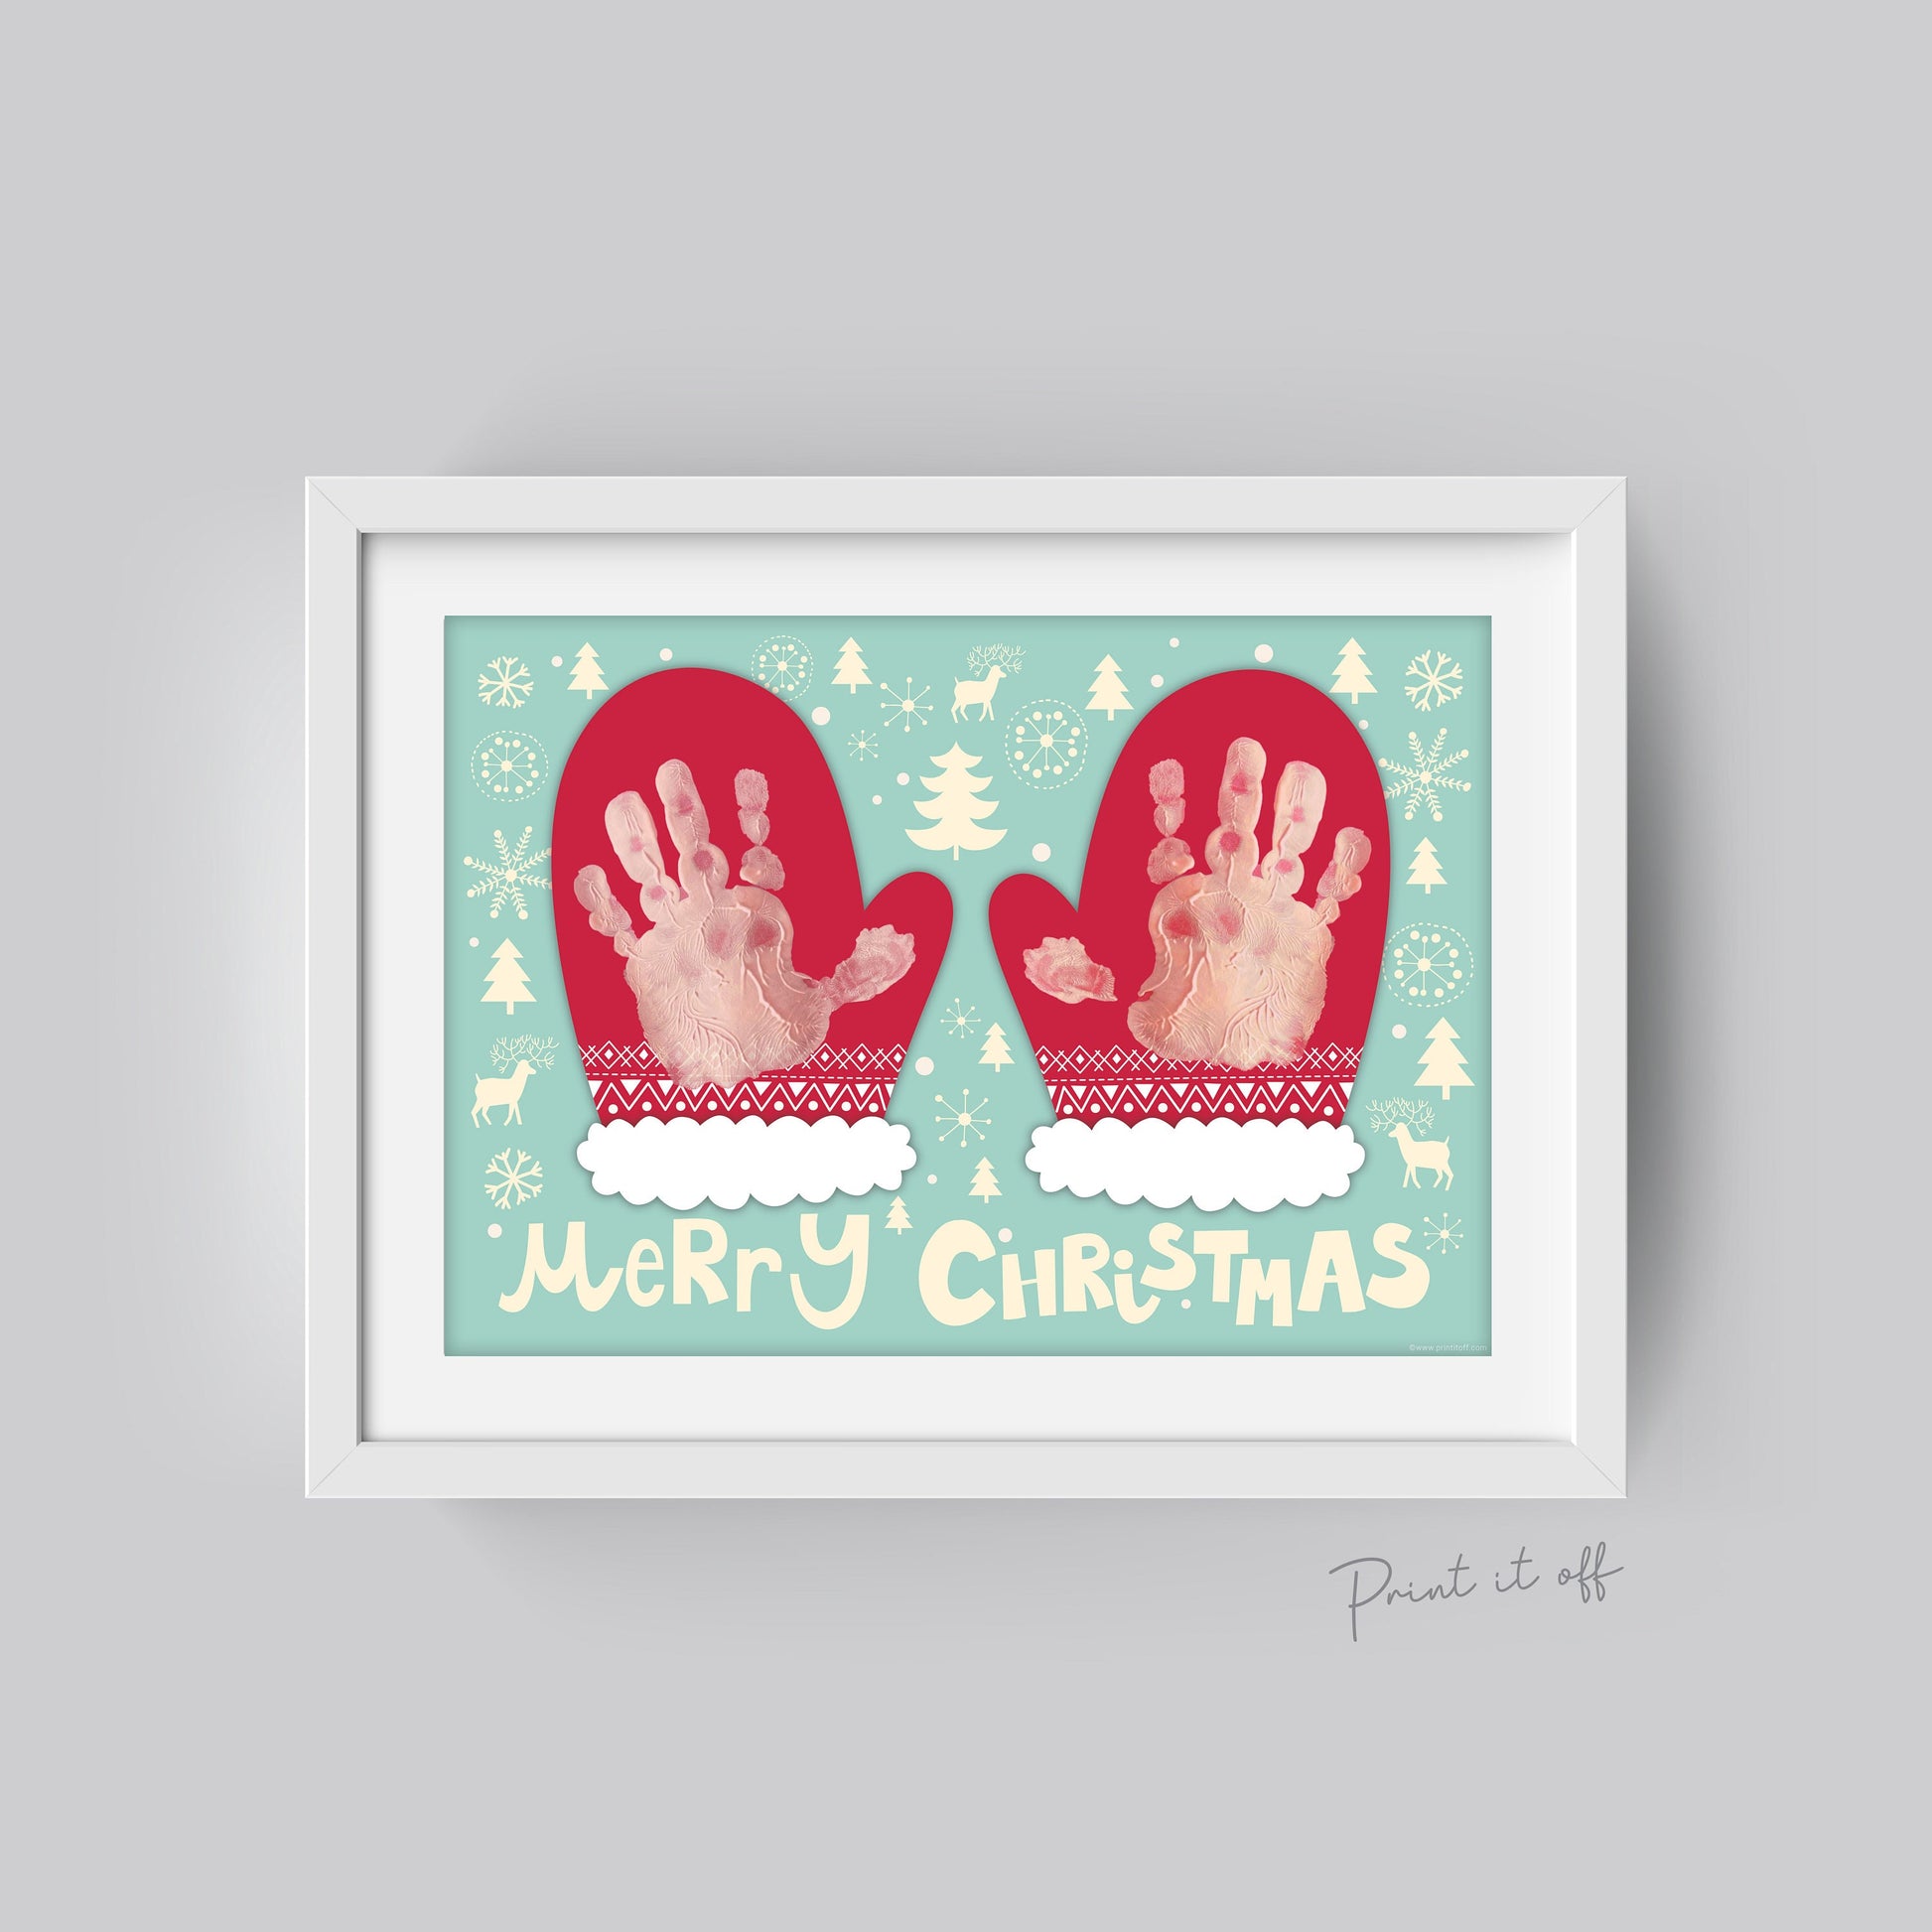 Hello Winter Handprint Footprint Printable Craft Art for Baby